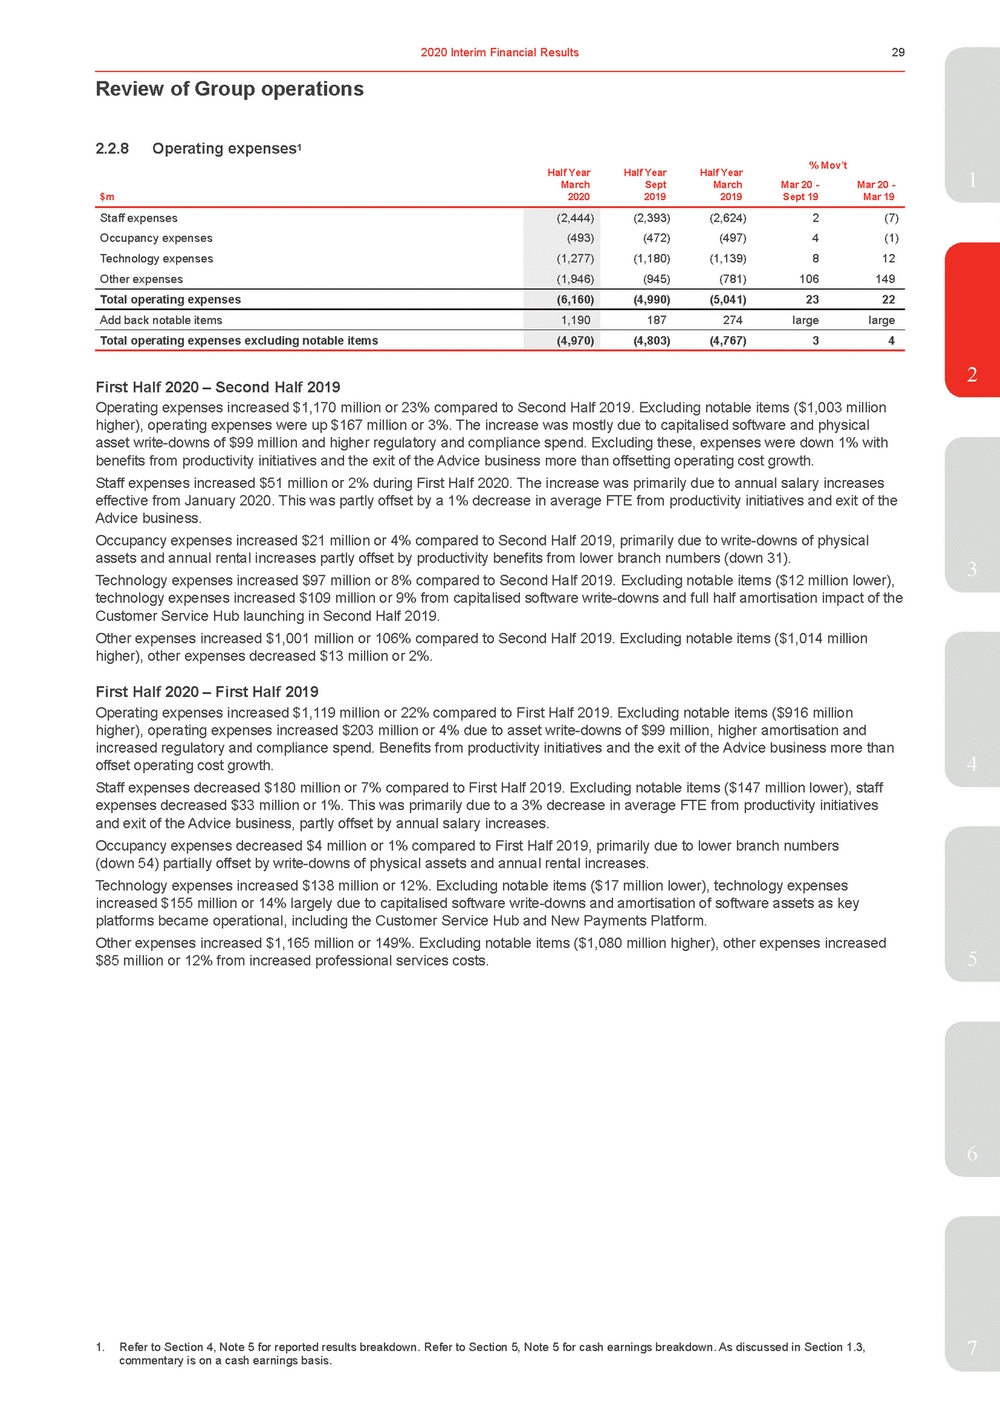 11676-3-ex1_westpac 2020 interim financial results announcement_page_034.jpg